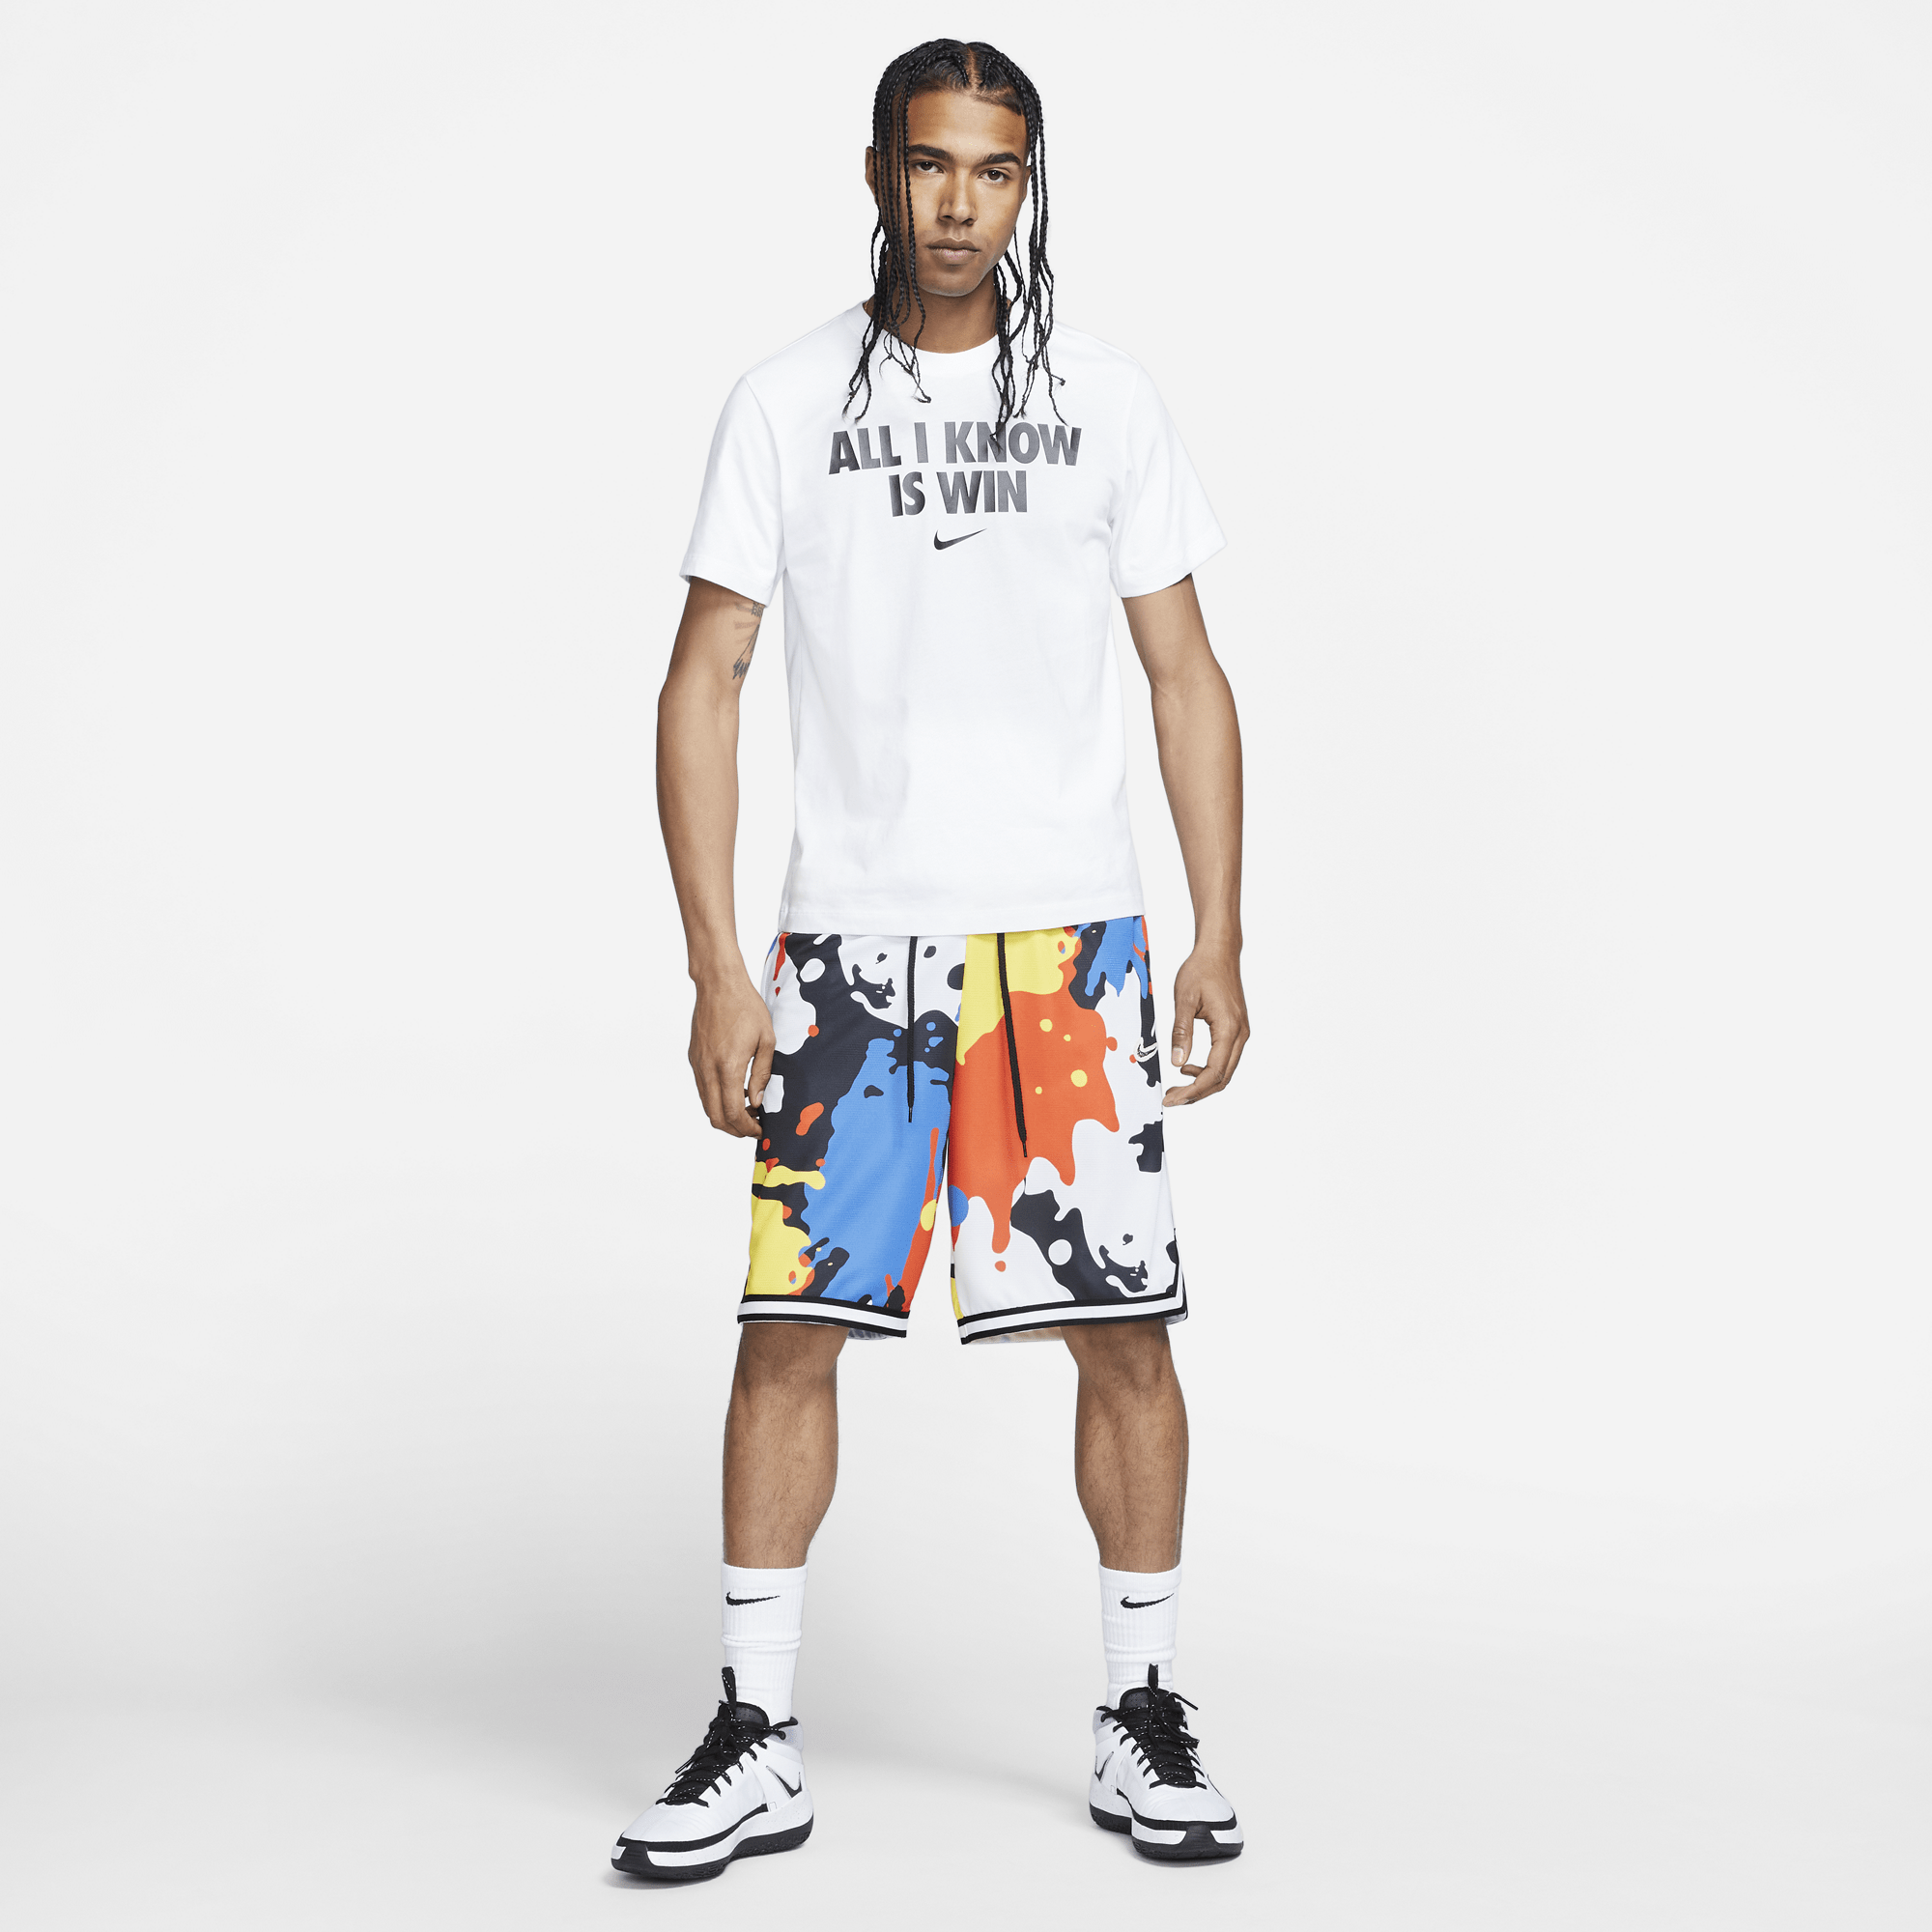 Nike Men's Dri-Fit DNA Basketball Jersey, Large, White